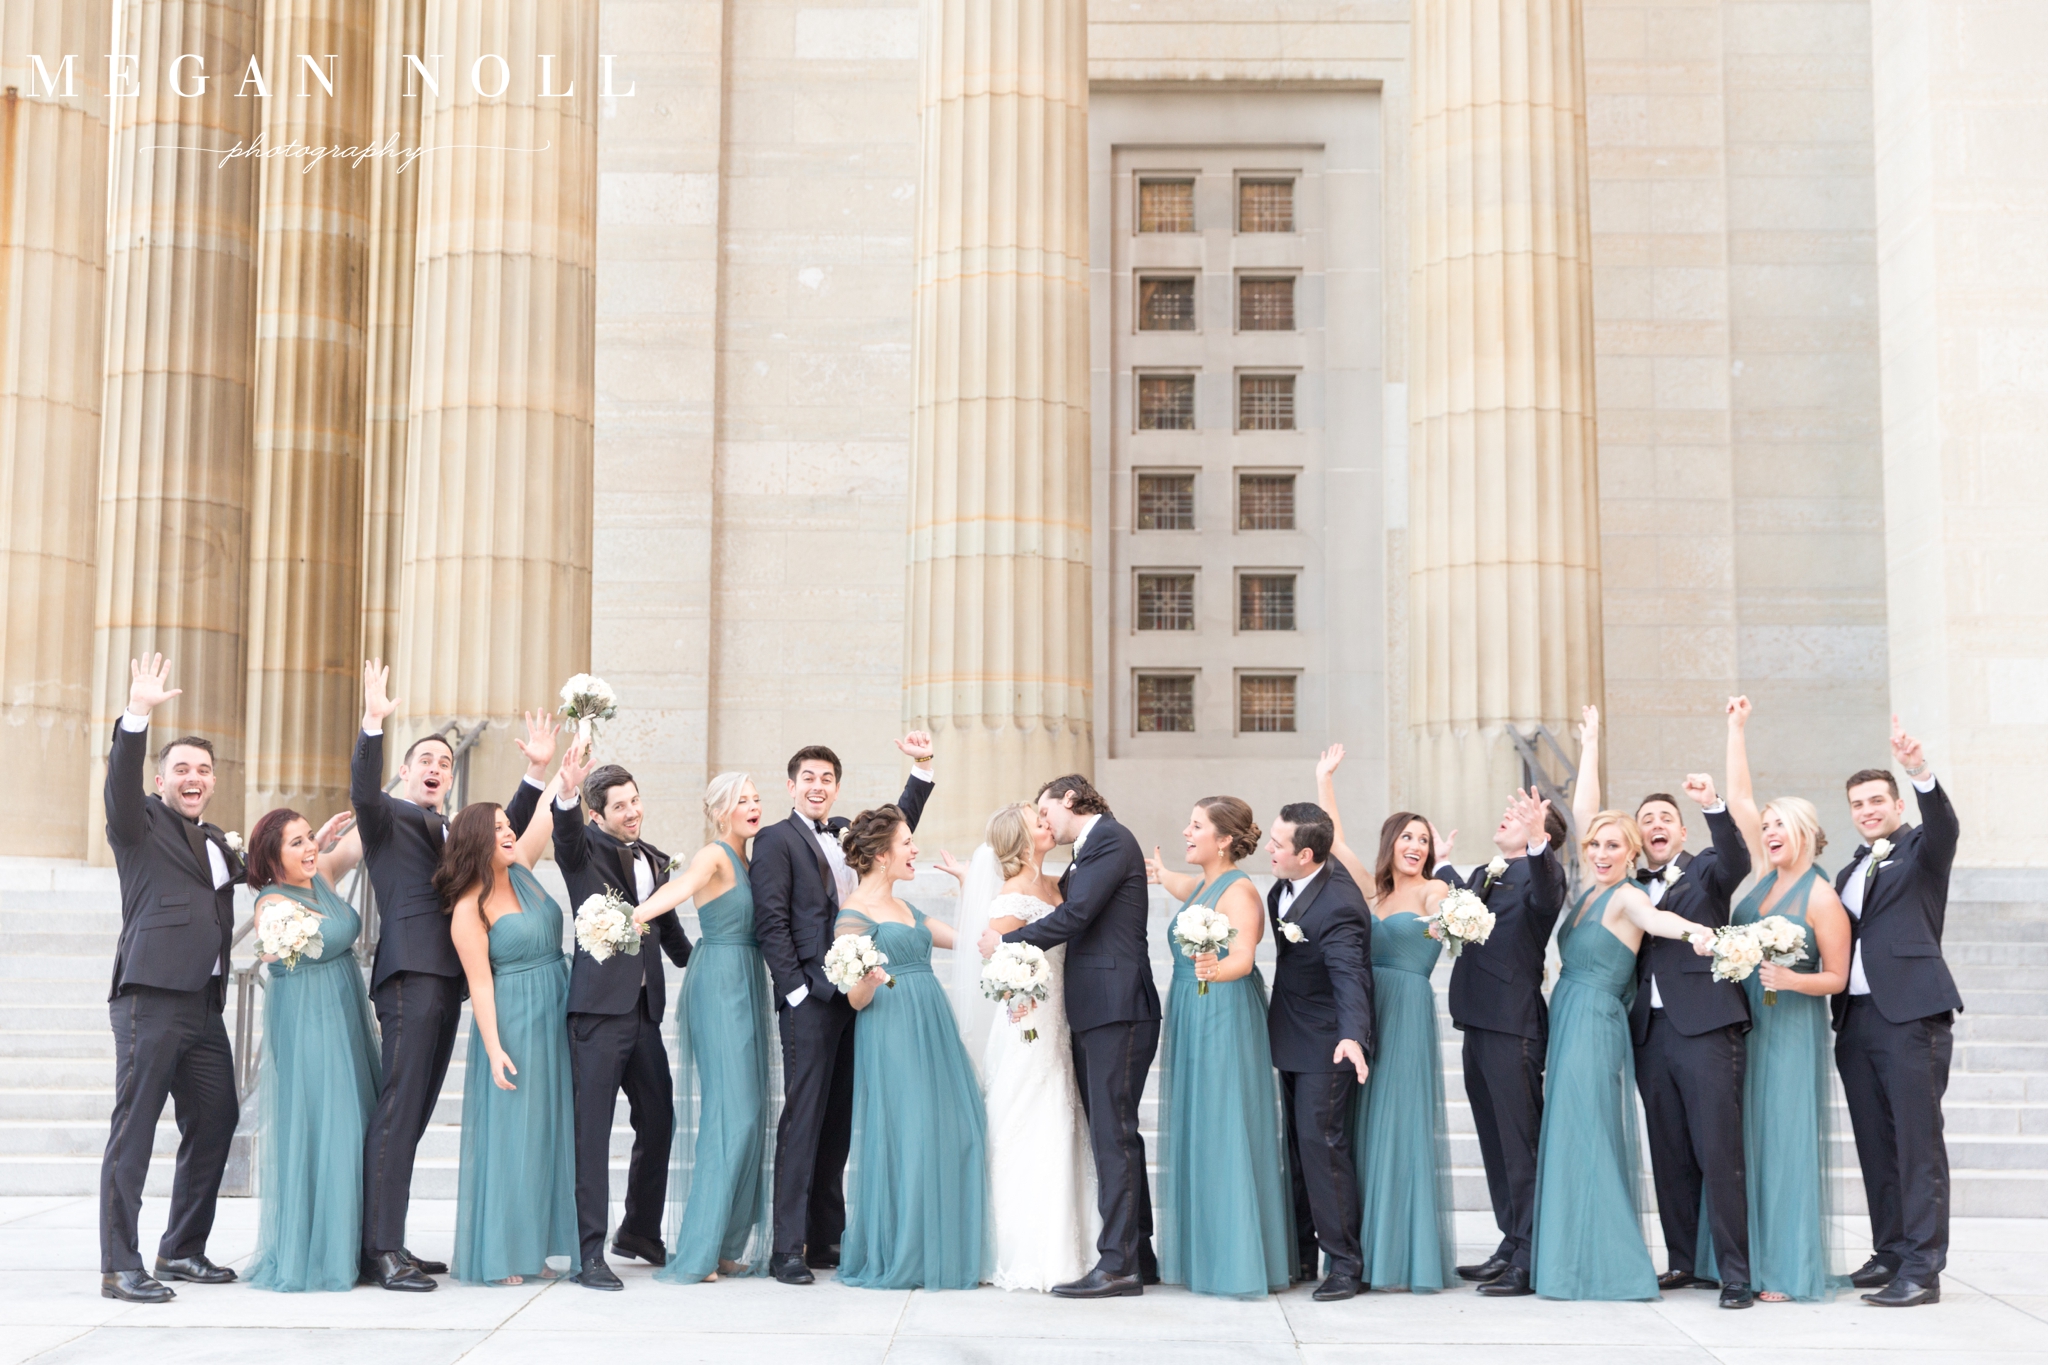 Wedding Photographers in Cincinnati, Bridal Party Pictures